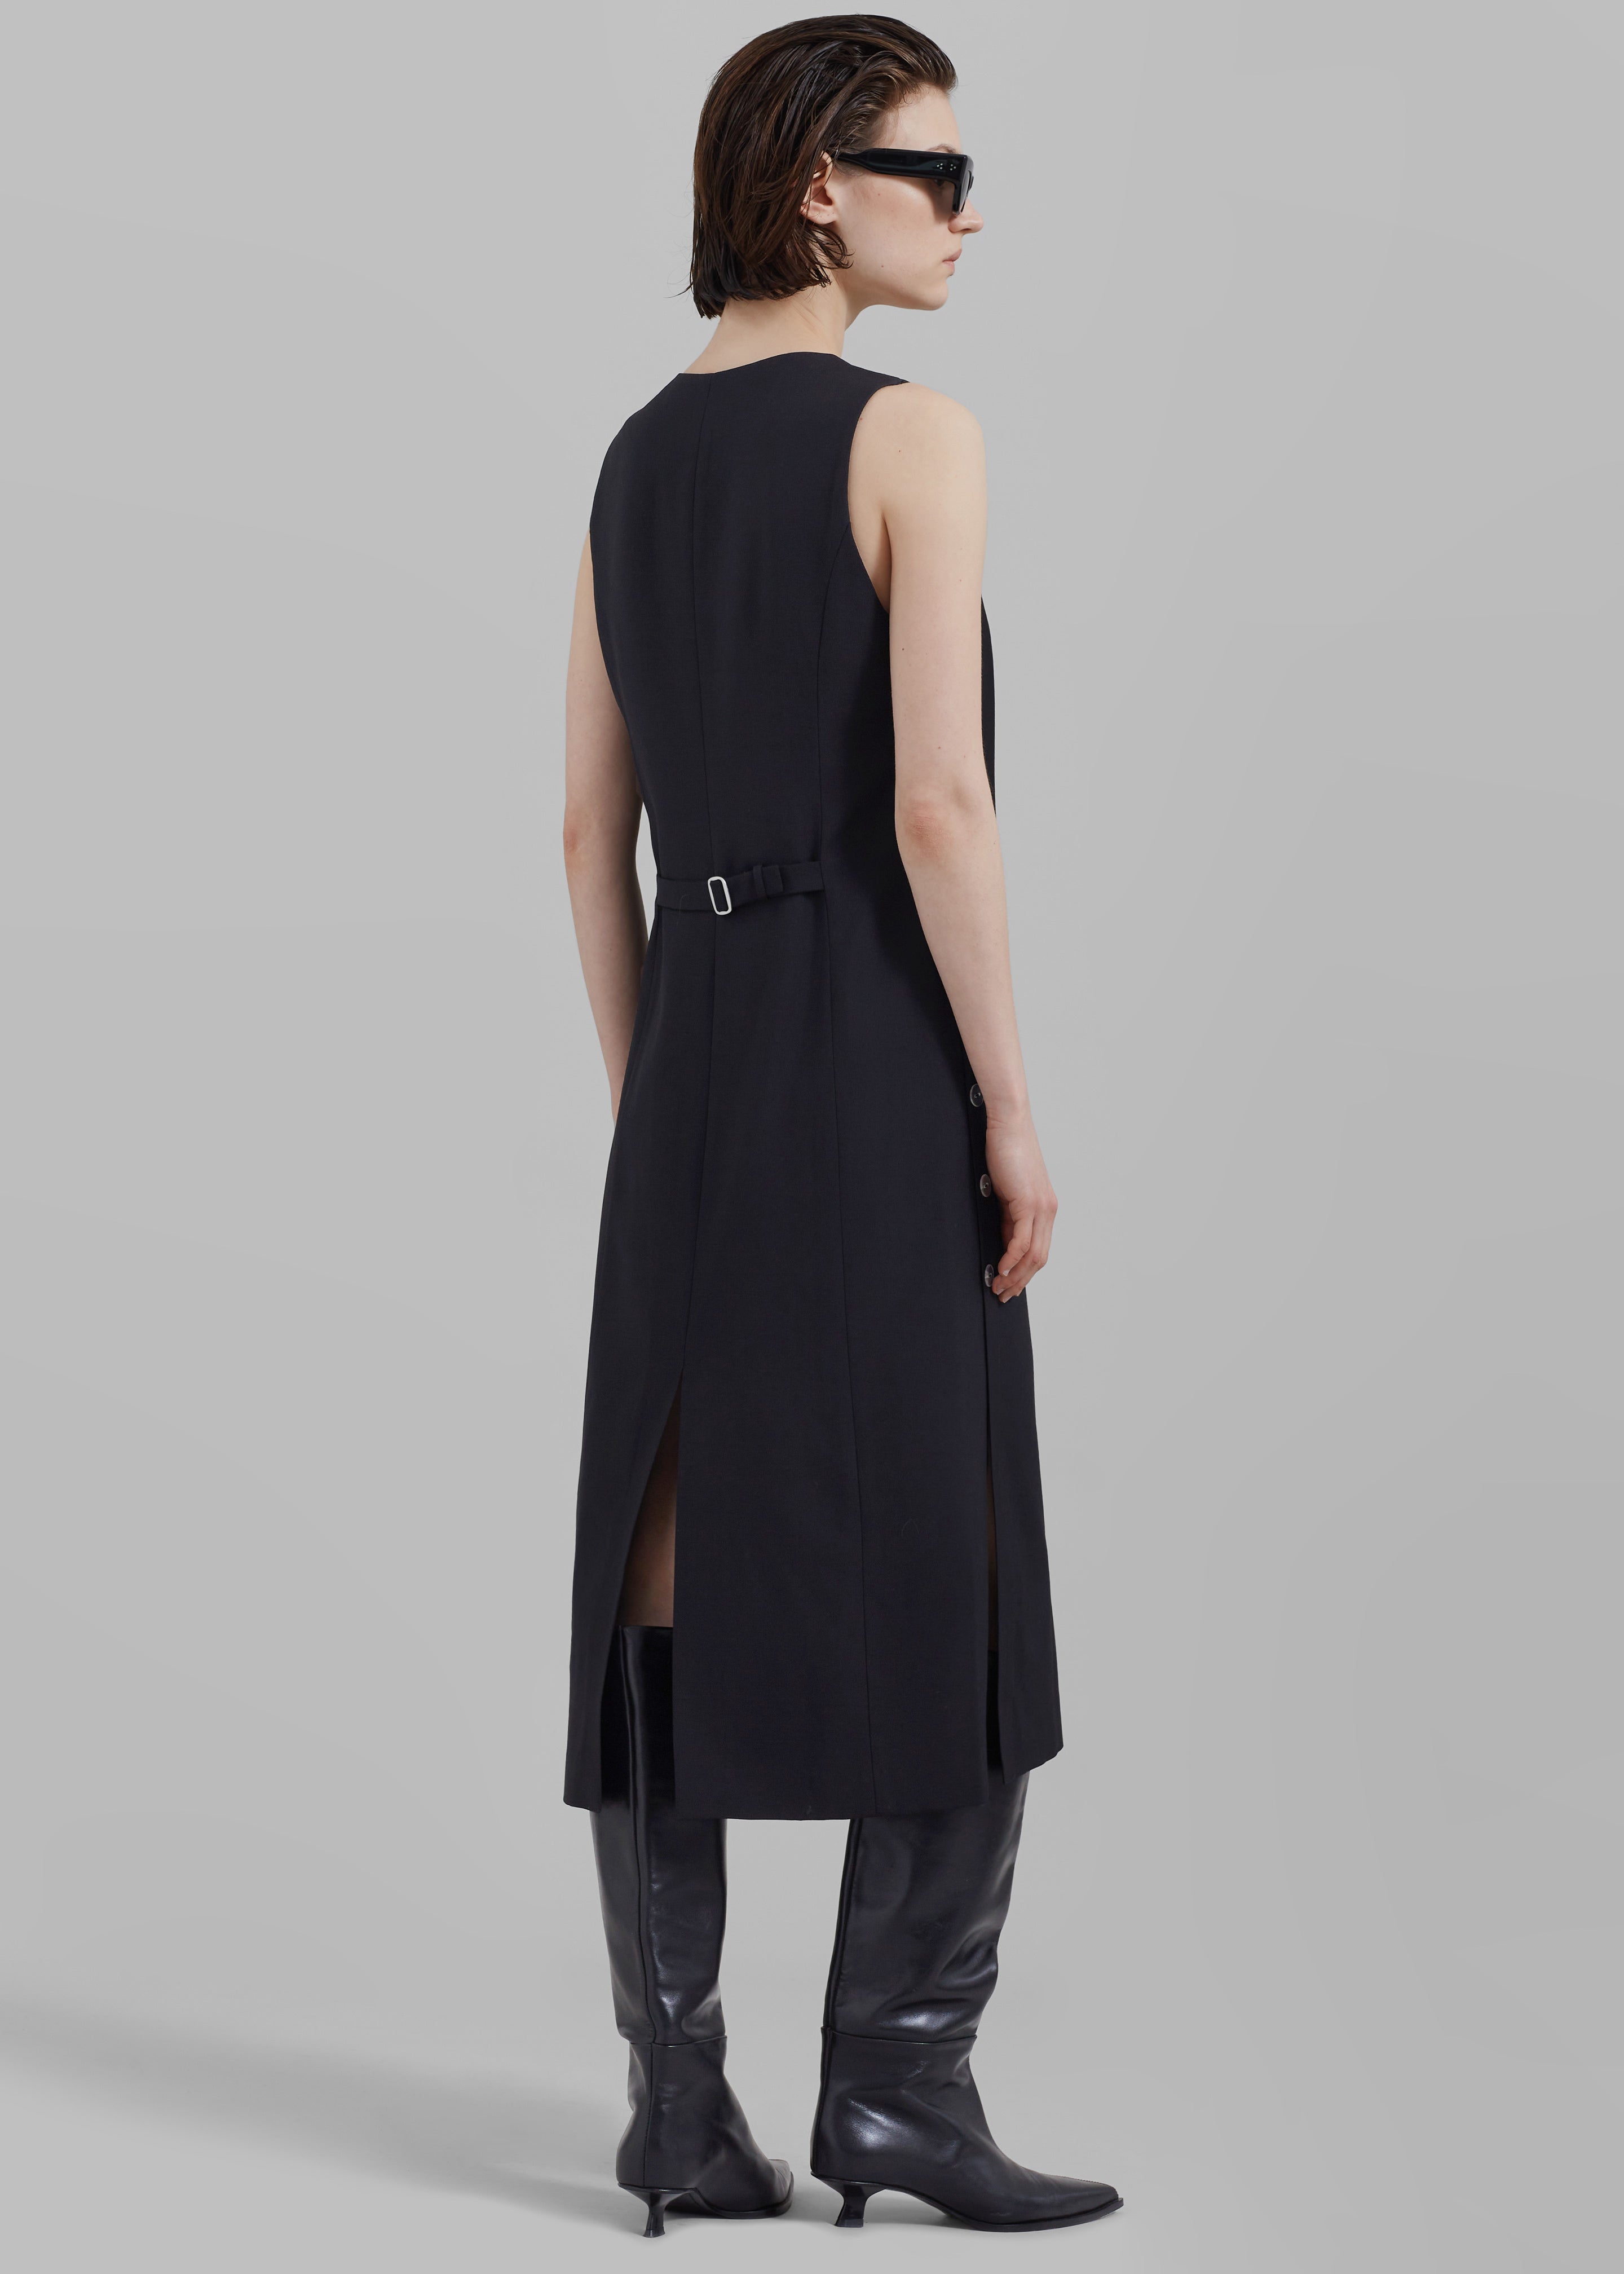 3.1 Phillip Lim Tailored Vest Dress with Set-In Bra - Black - 7